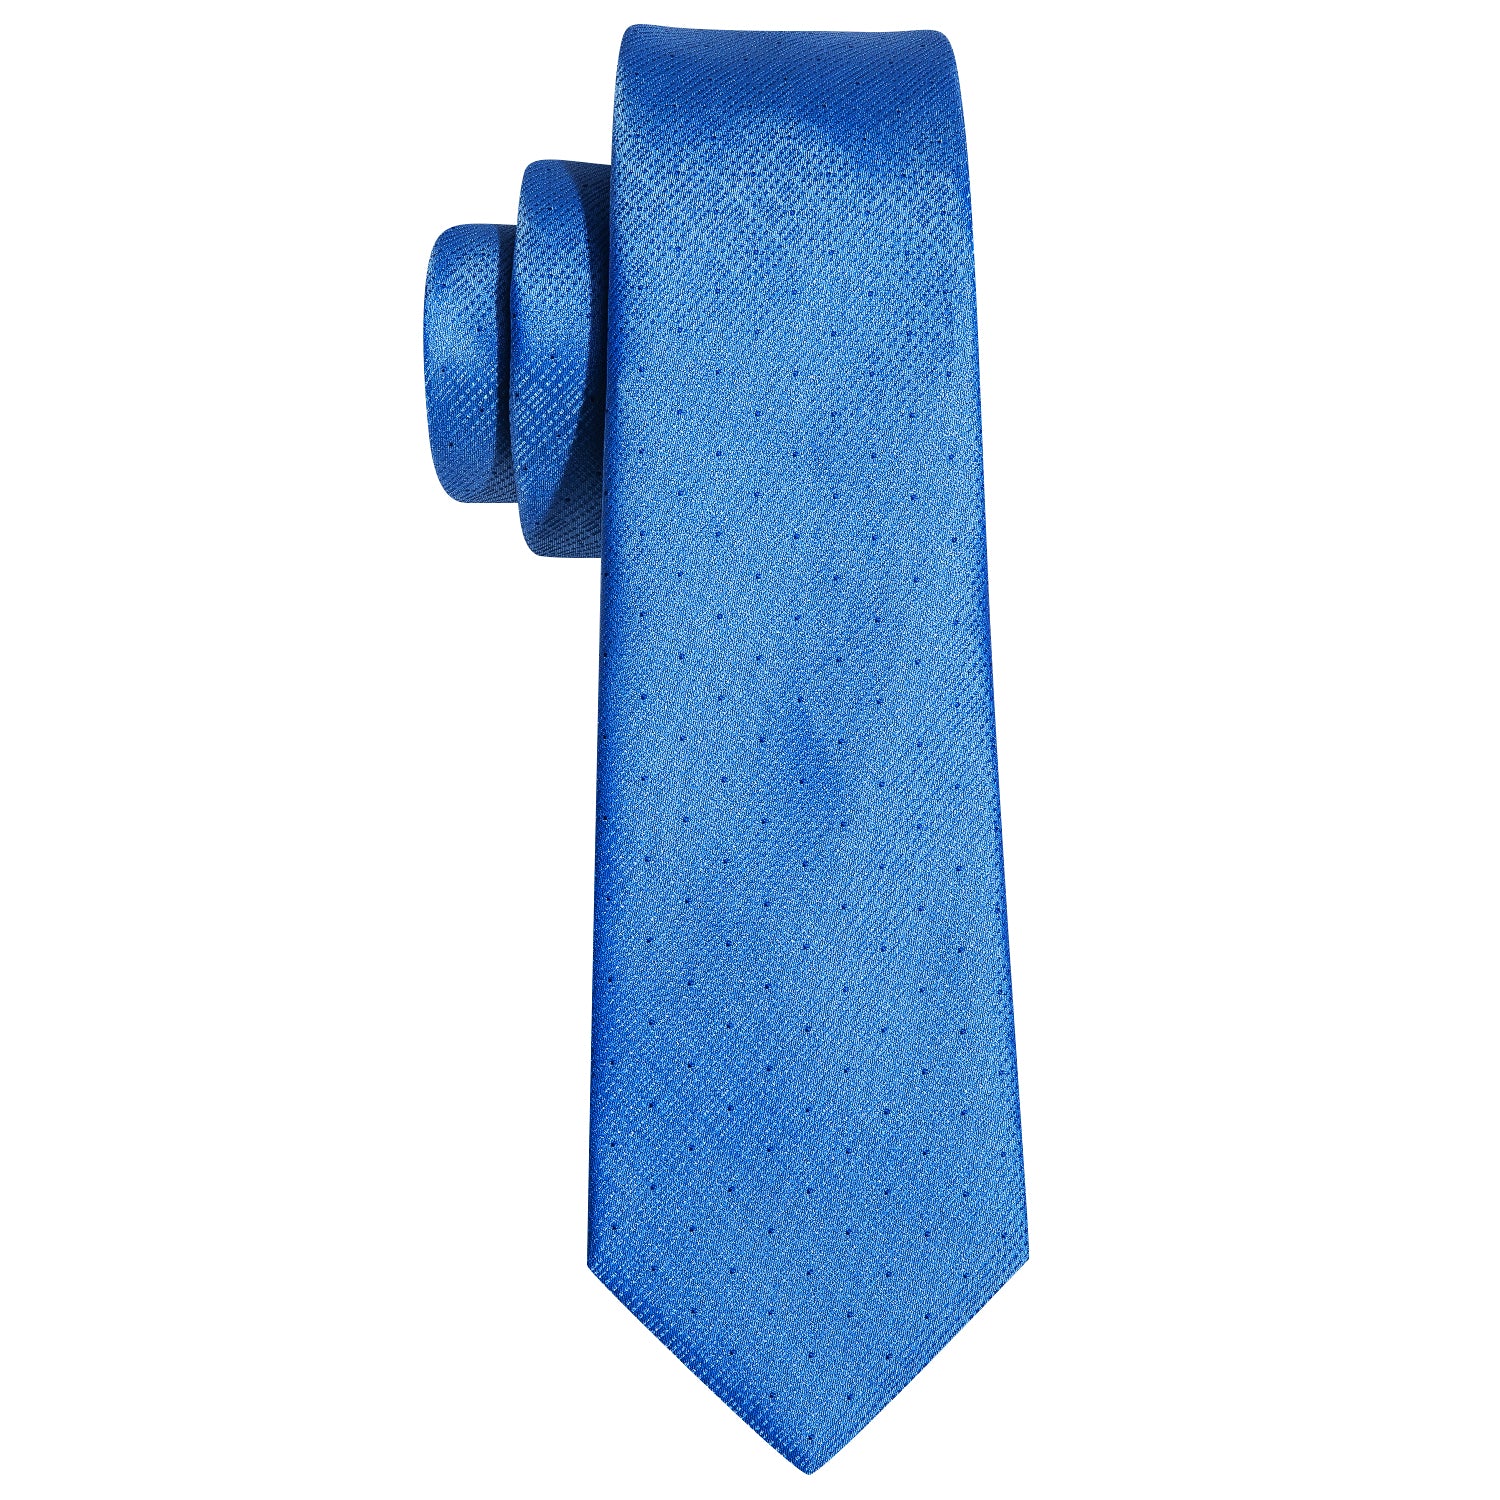 New Blue Solid Silk Tie Hanky Cufflinks Set